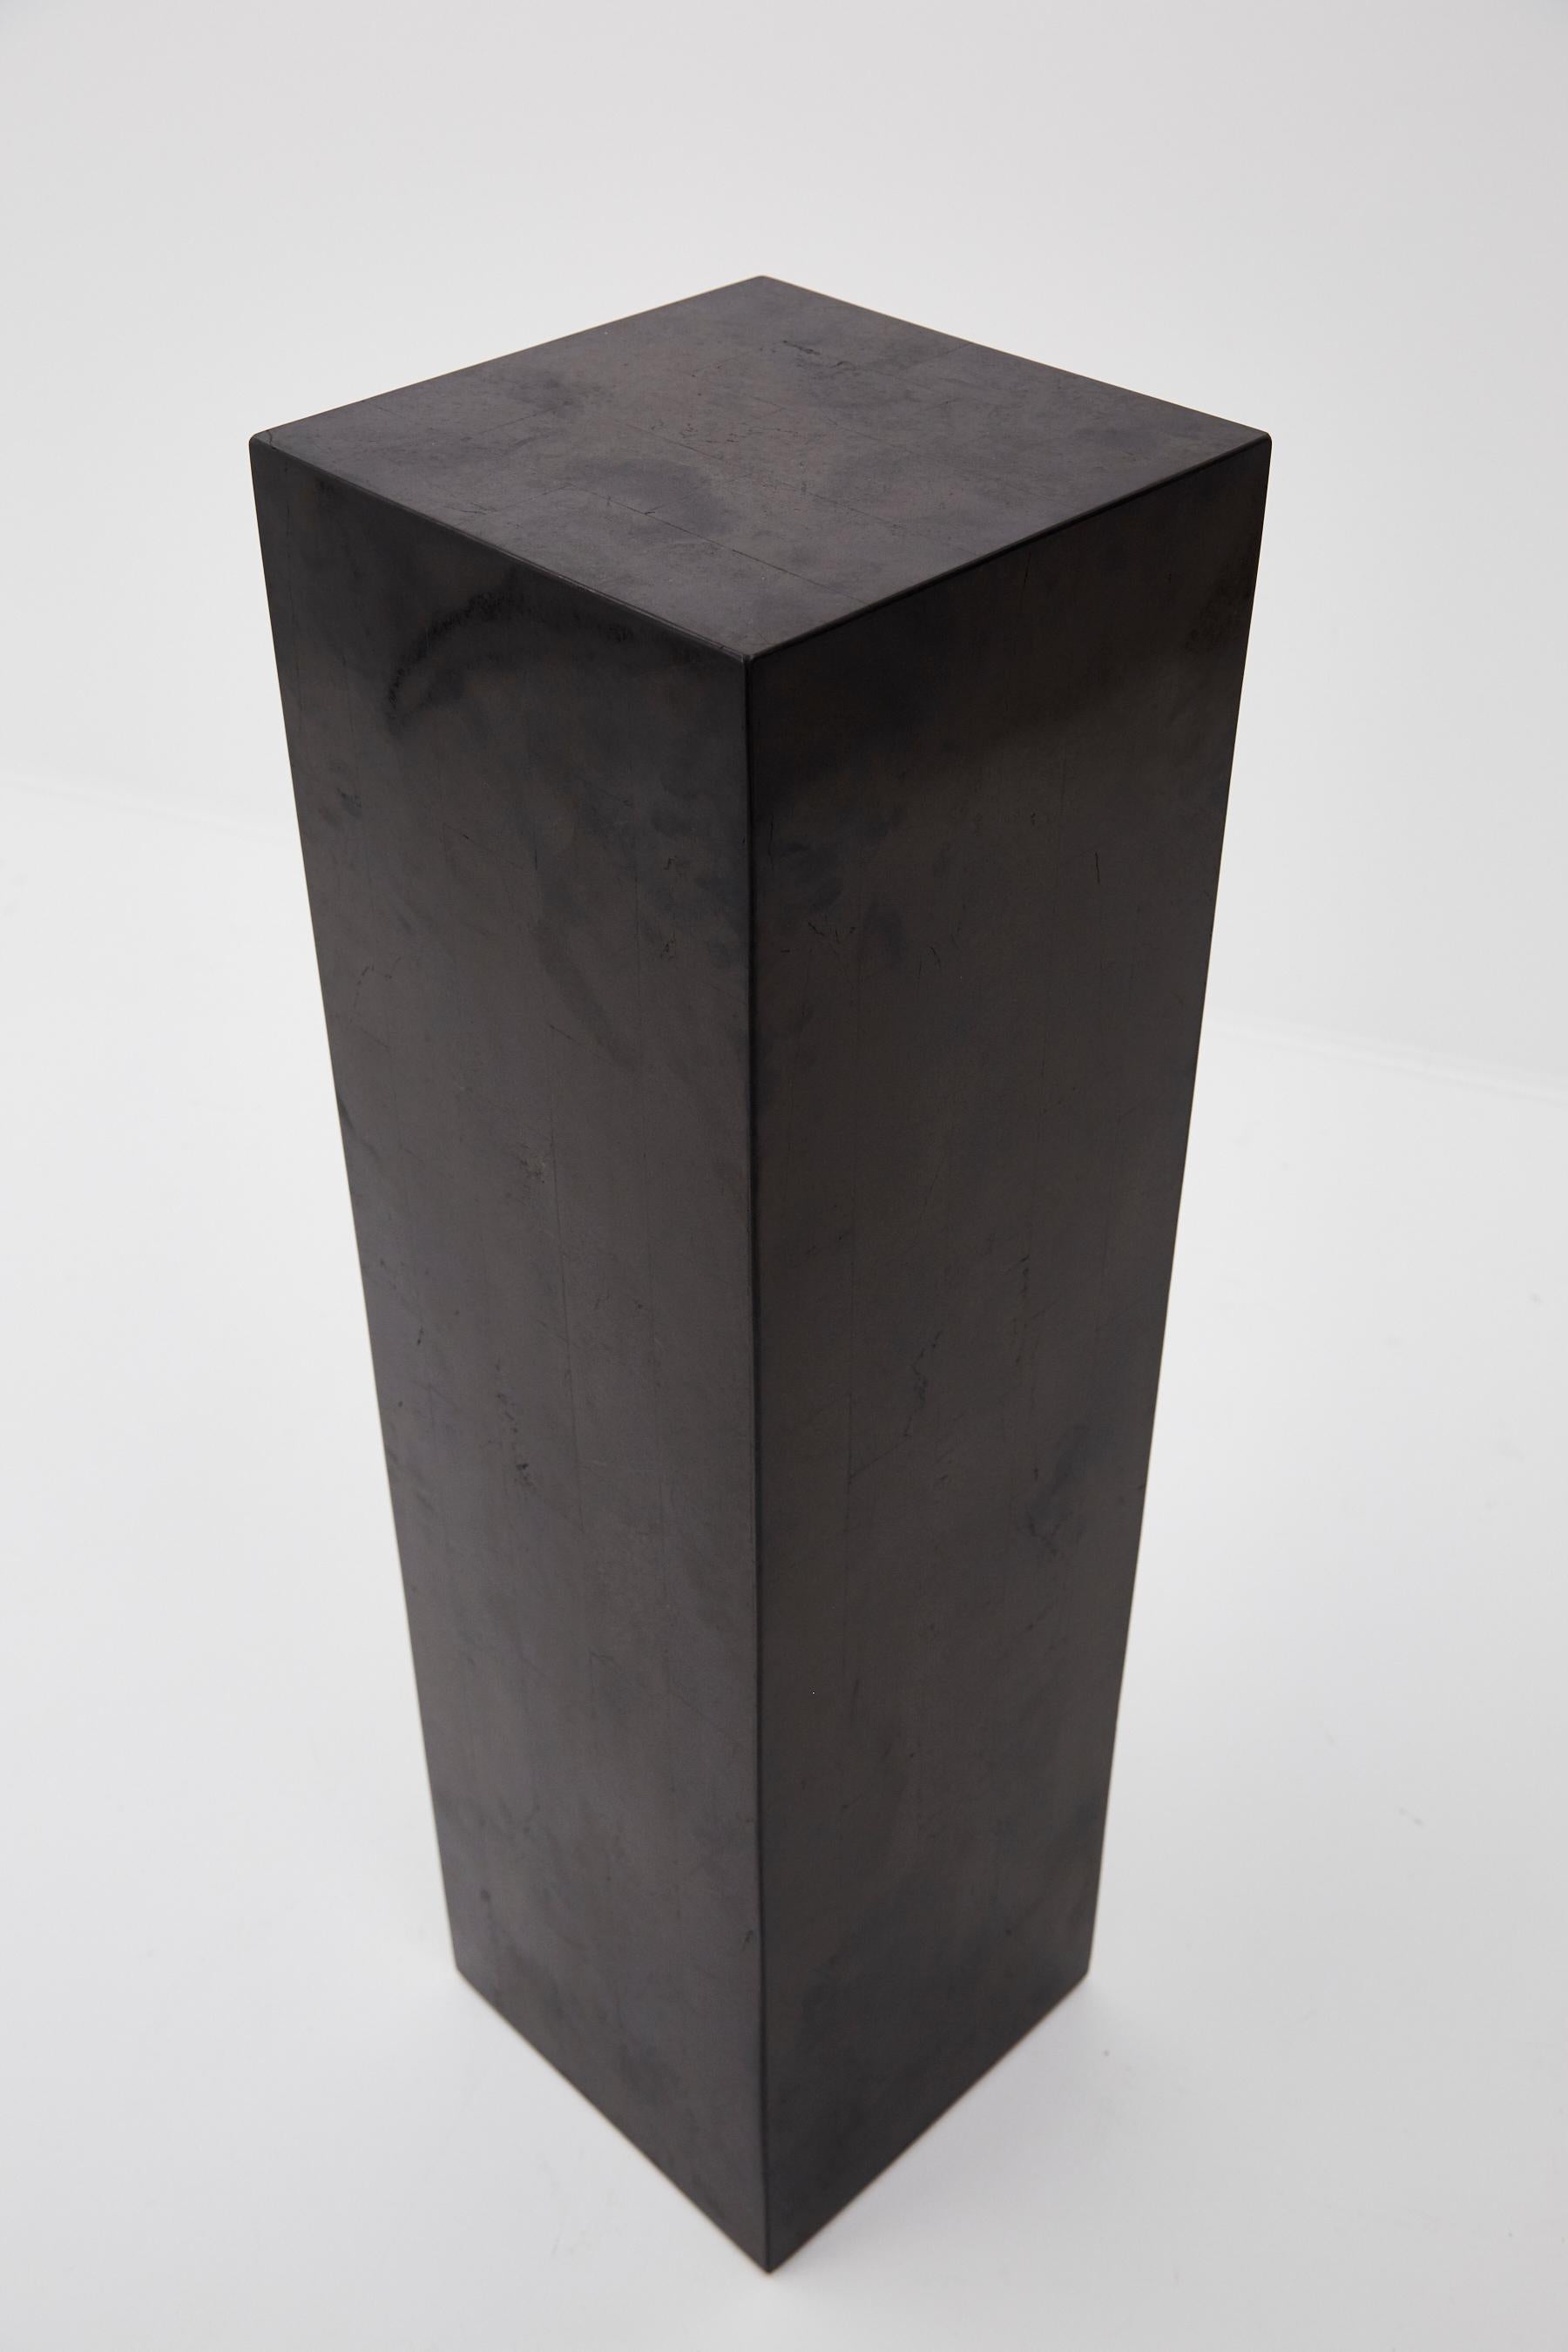 Inlay Tessellated Black Stone Square Pedestal